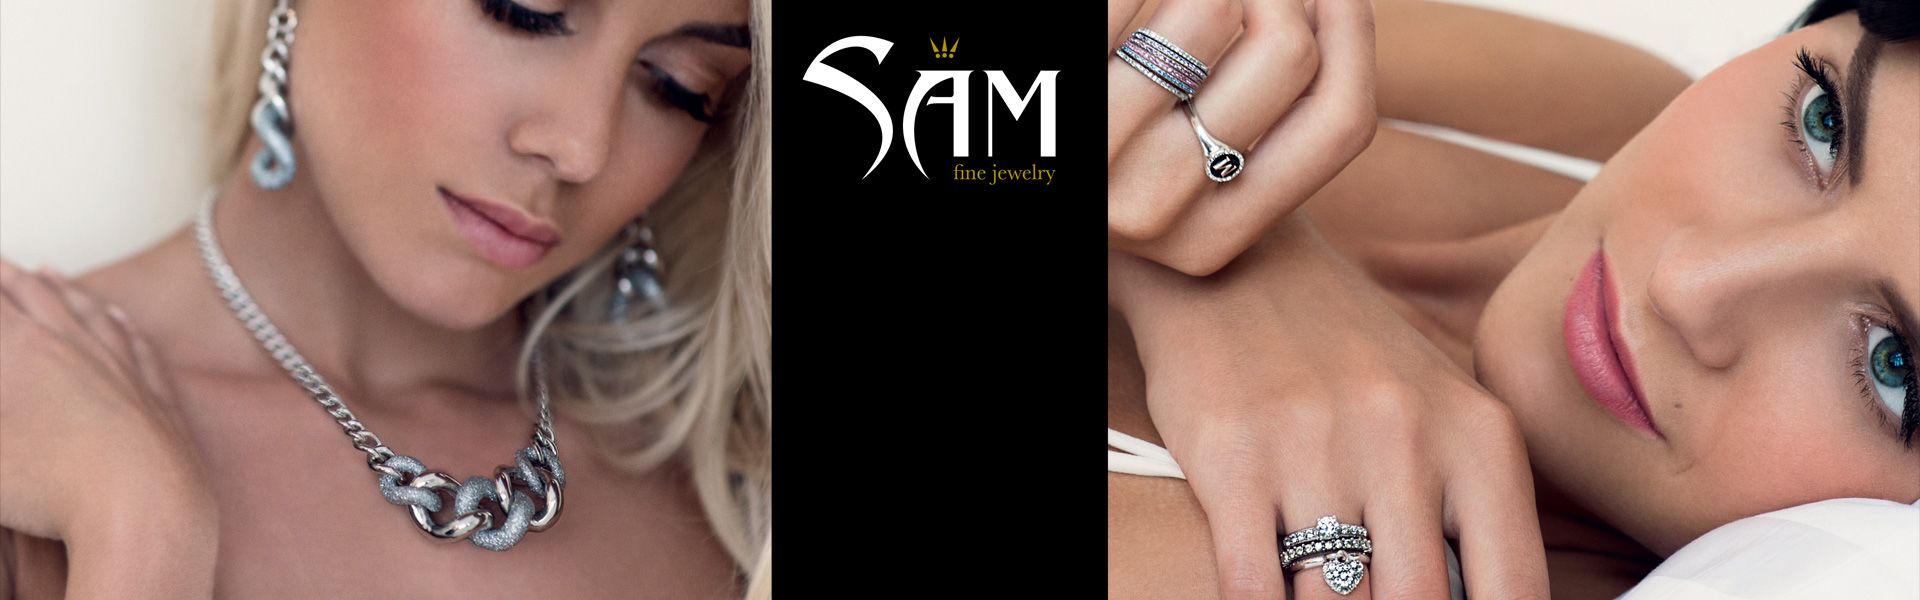 Jewelry store SAM